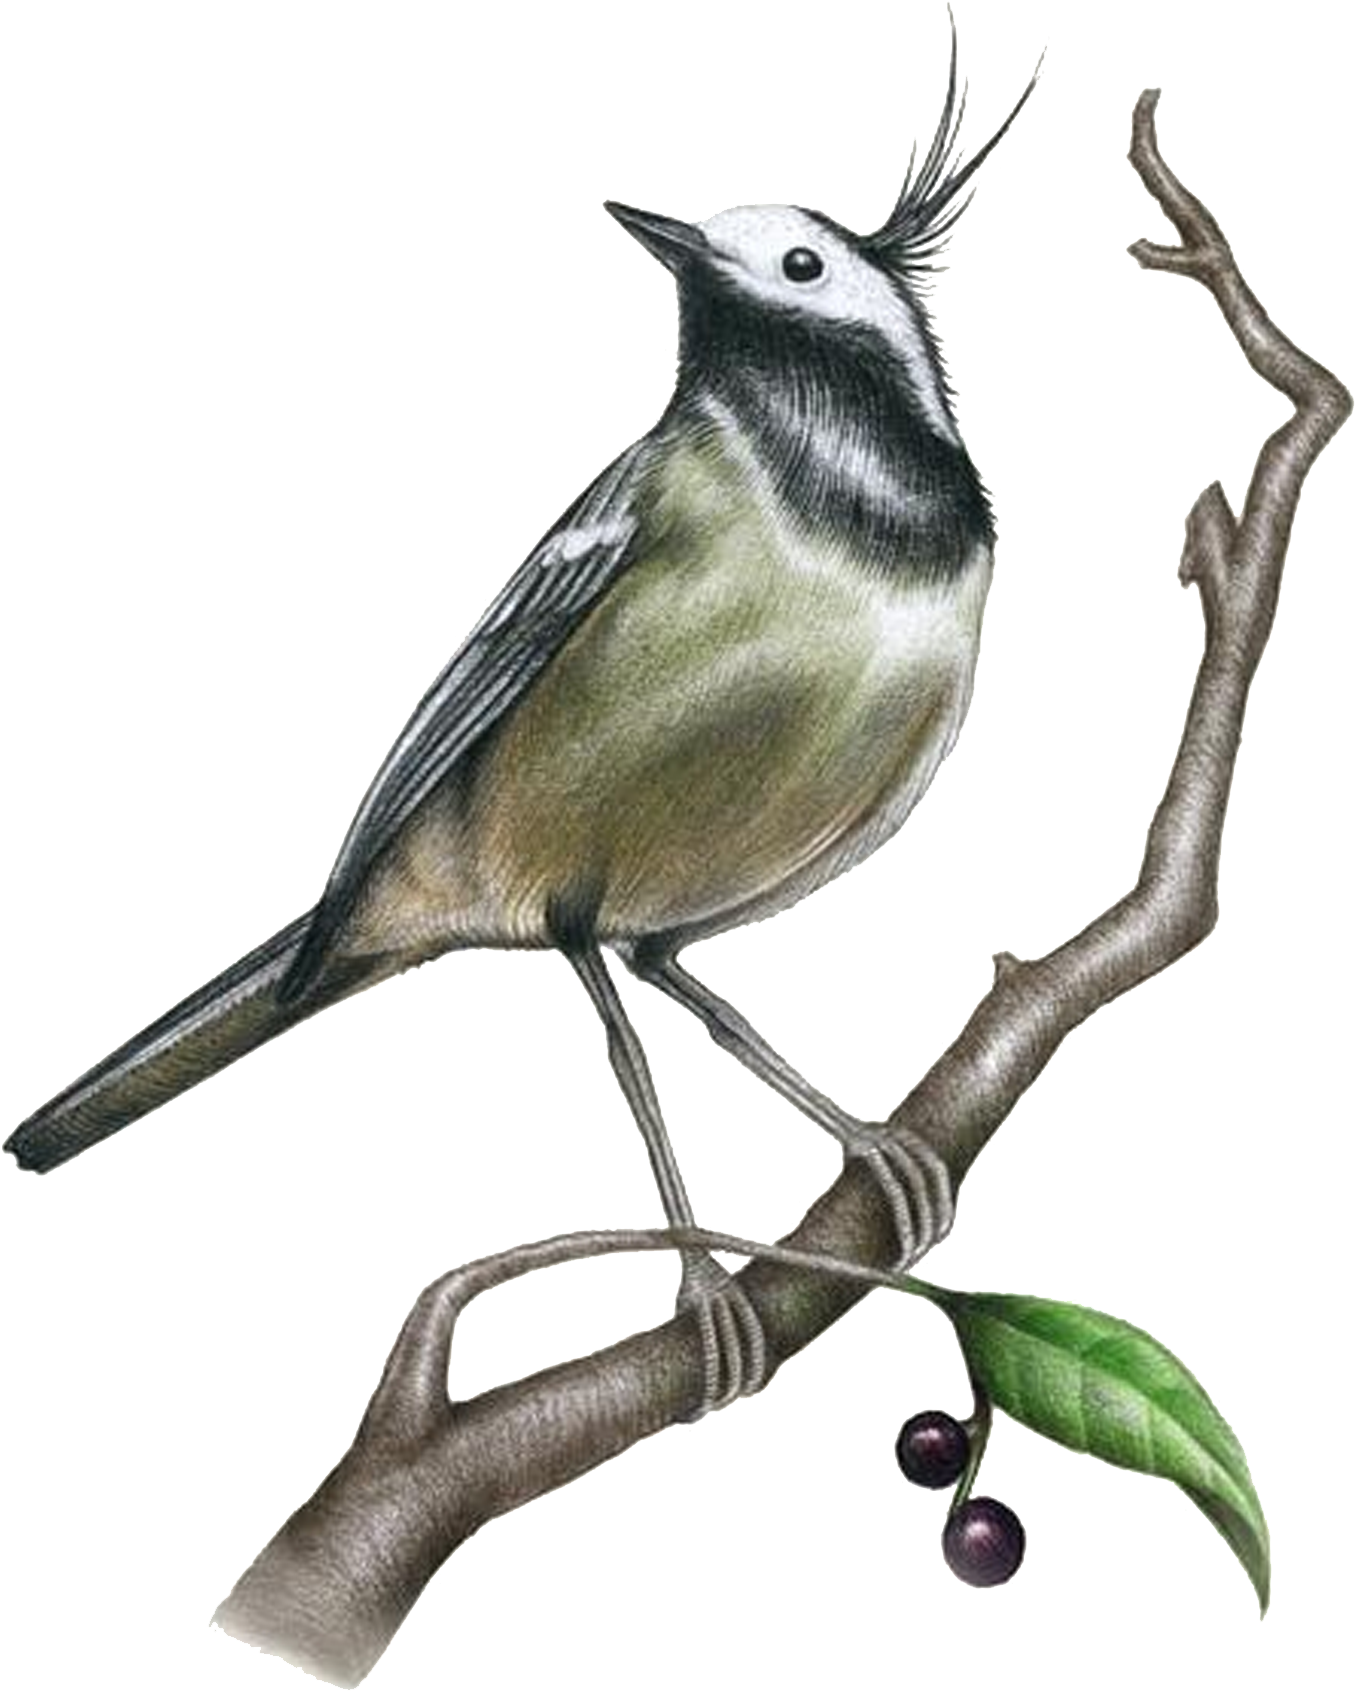 Drawing Painting Bird Illustration - Drawing Painting Bird Illustration (1604x1772)